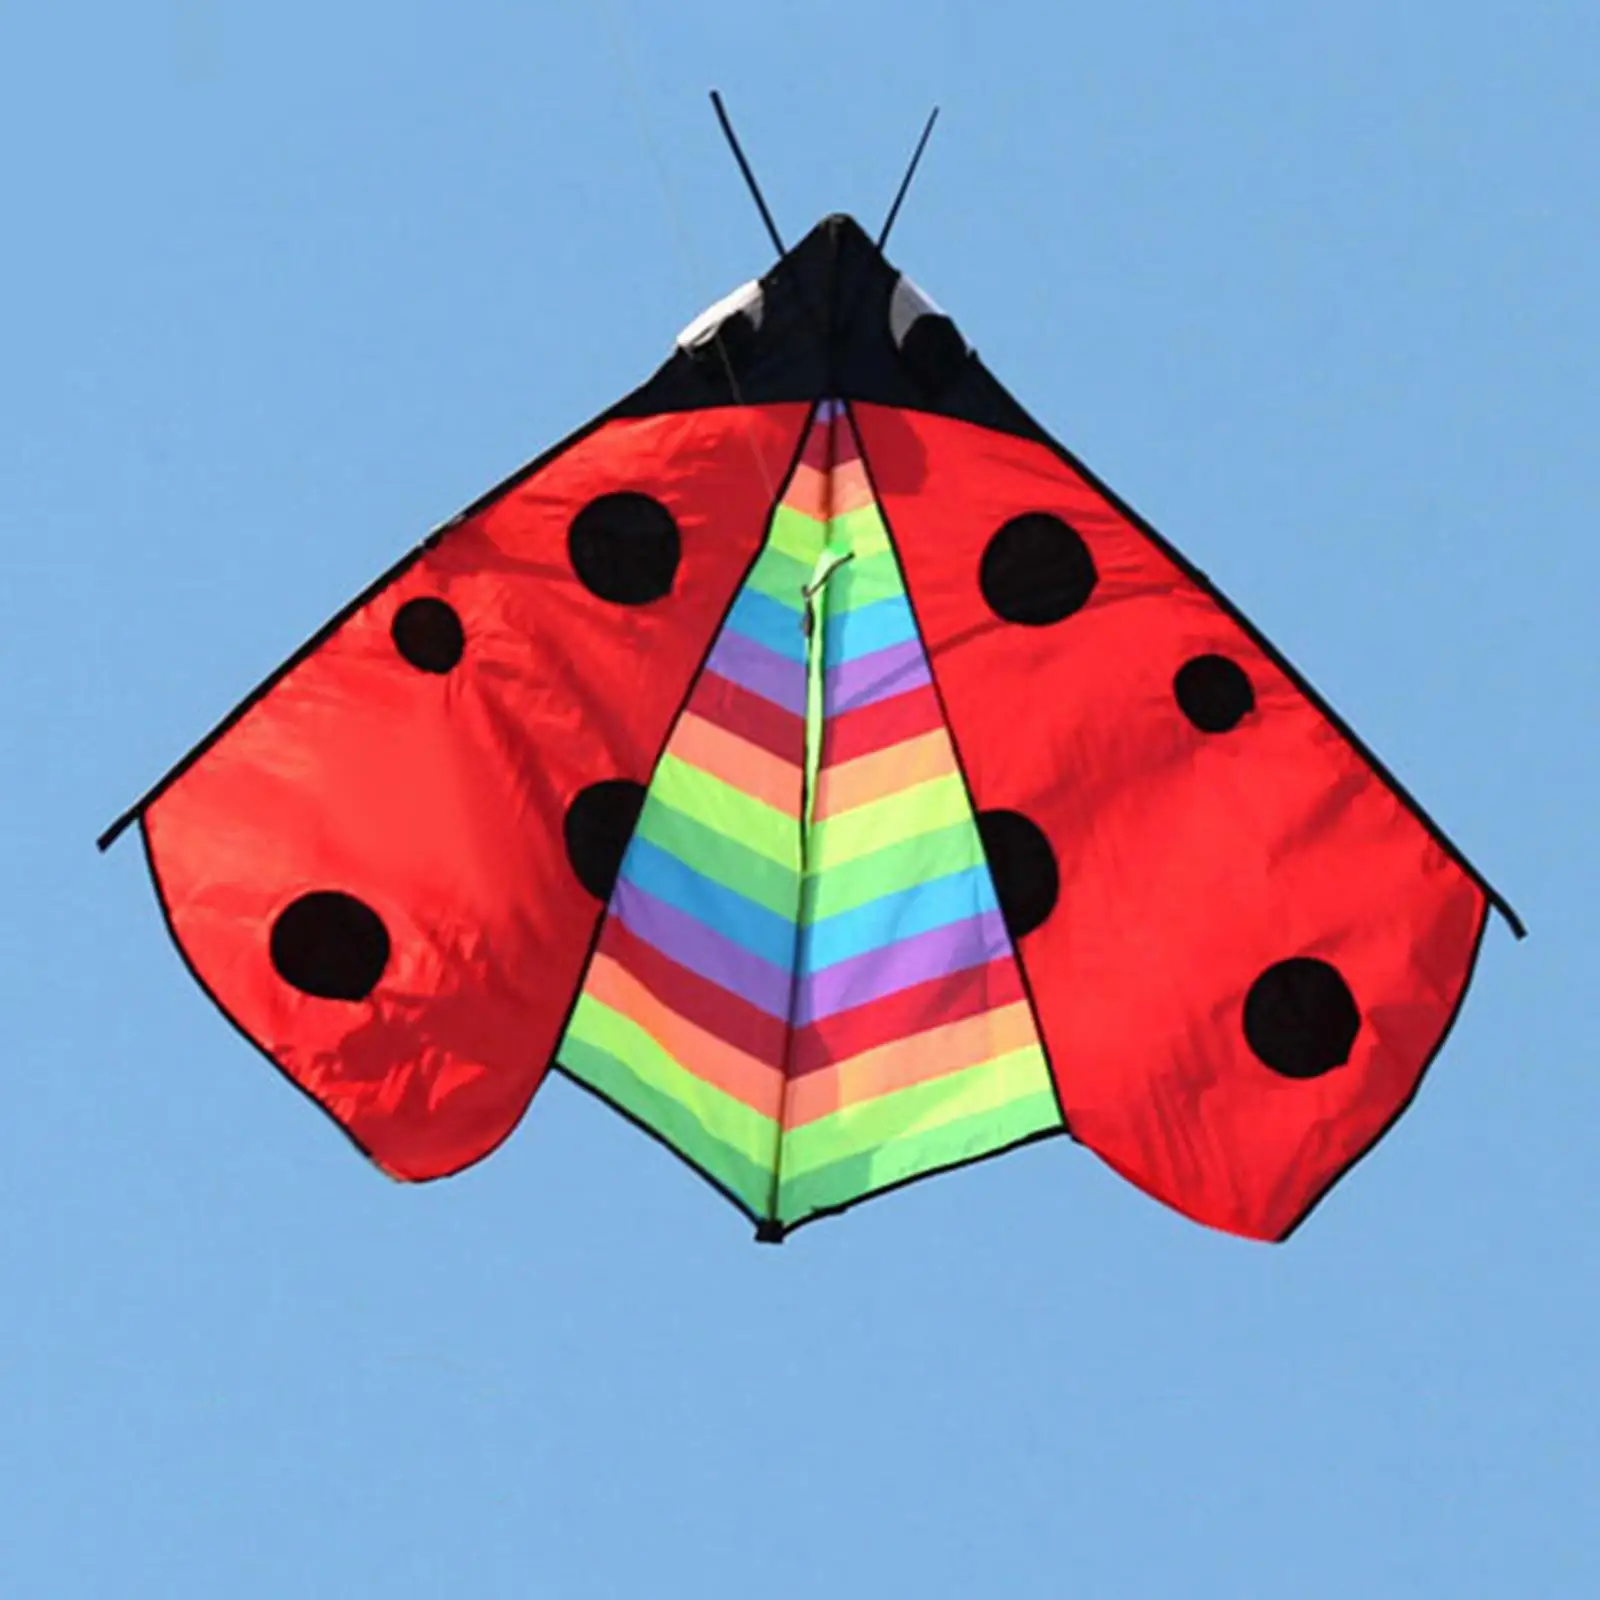 Novelty Delta Kite Fly Kite Easy Flyer Single-Line Fun Toy Giant Triangle Ladybug Kite for Park Sports Beach Outdoor Holiday